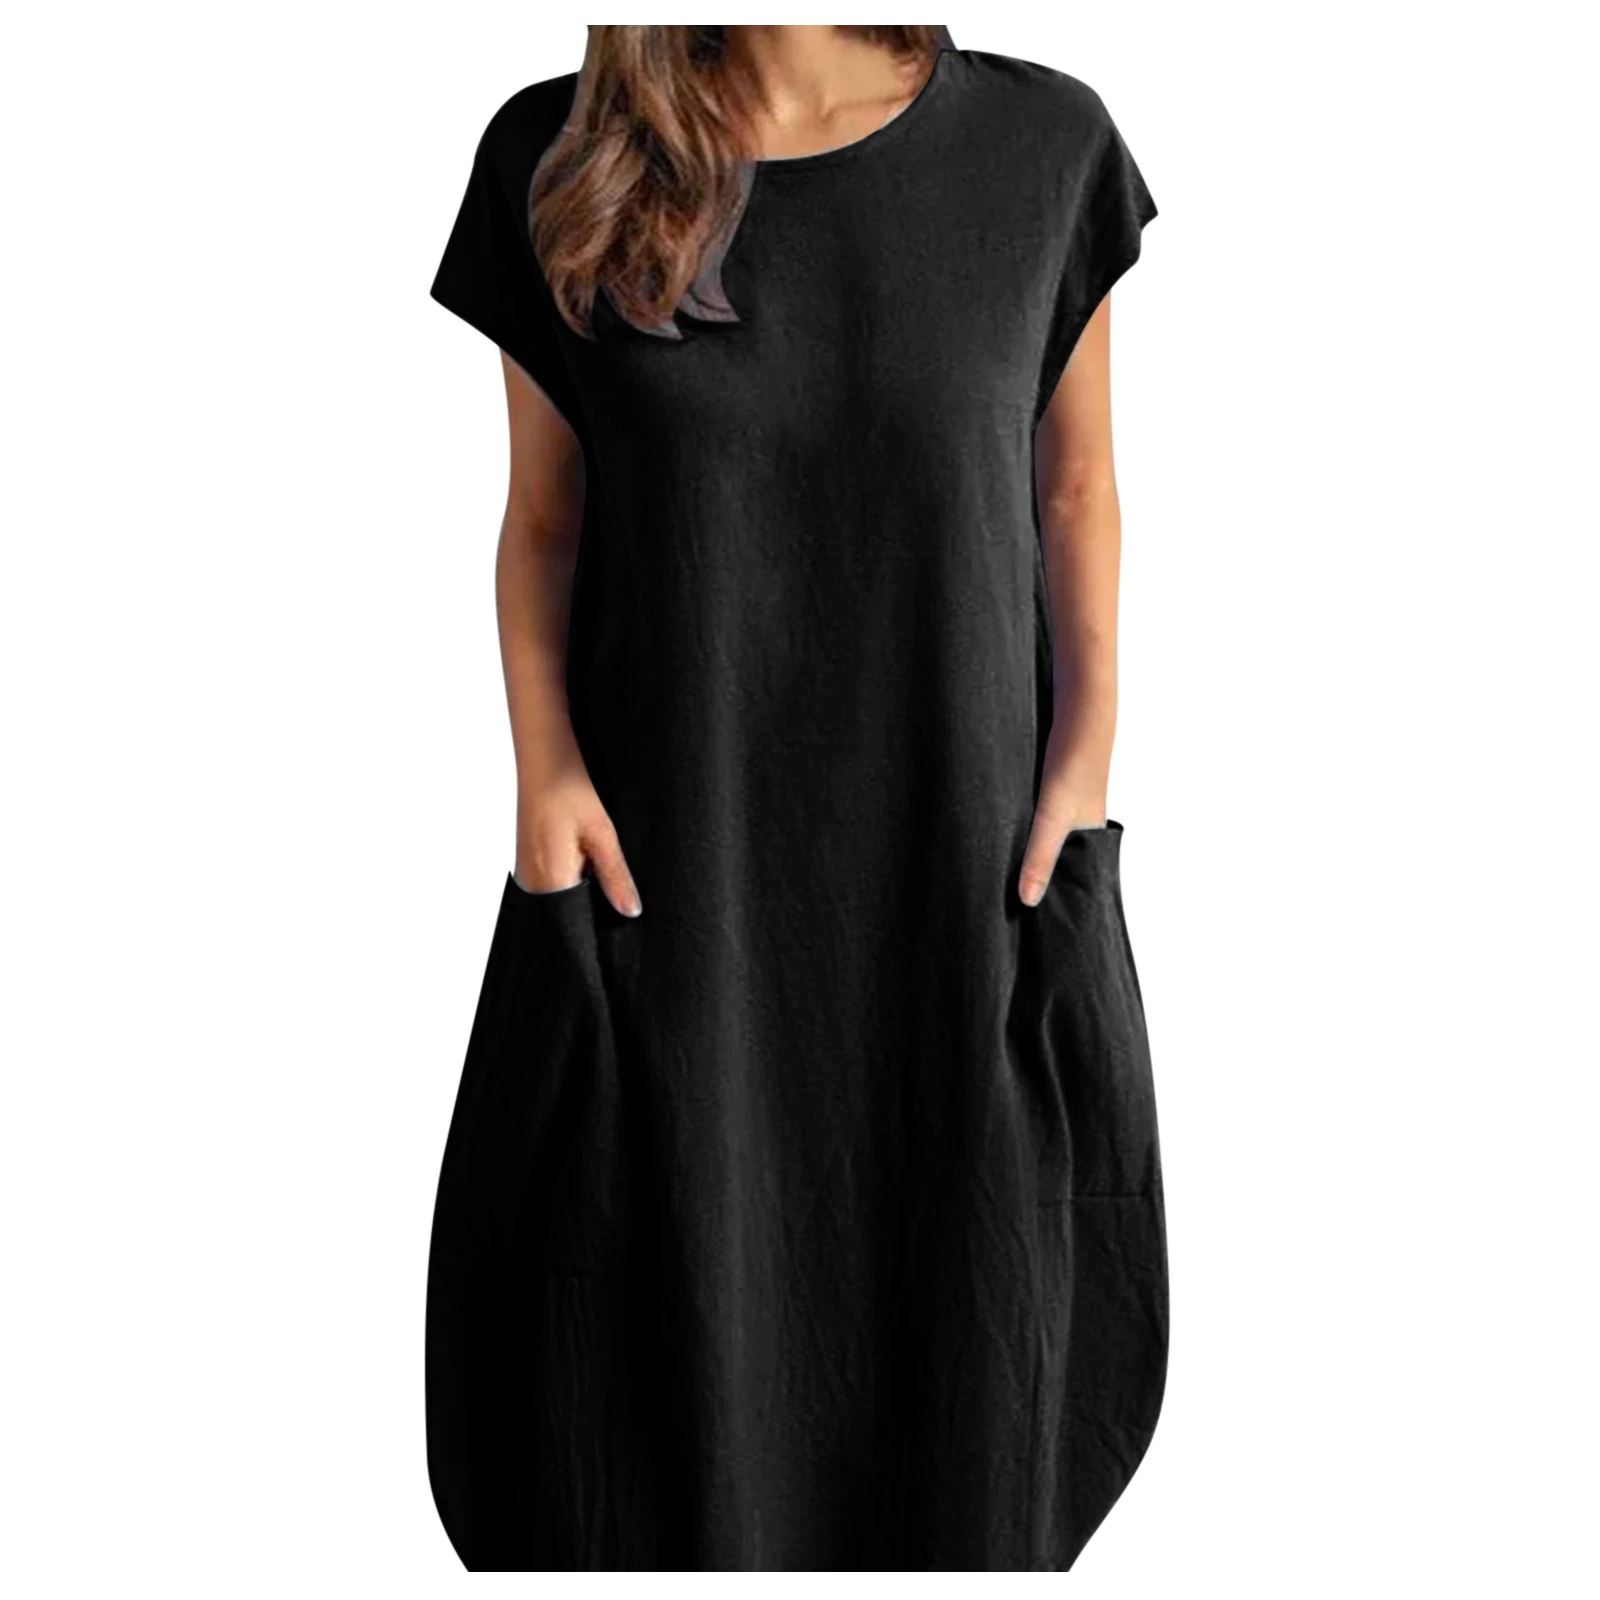 Women O-neck Short Sleeve Mid-Calf Loose Casual Dress